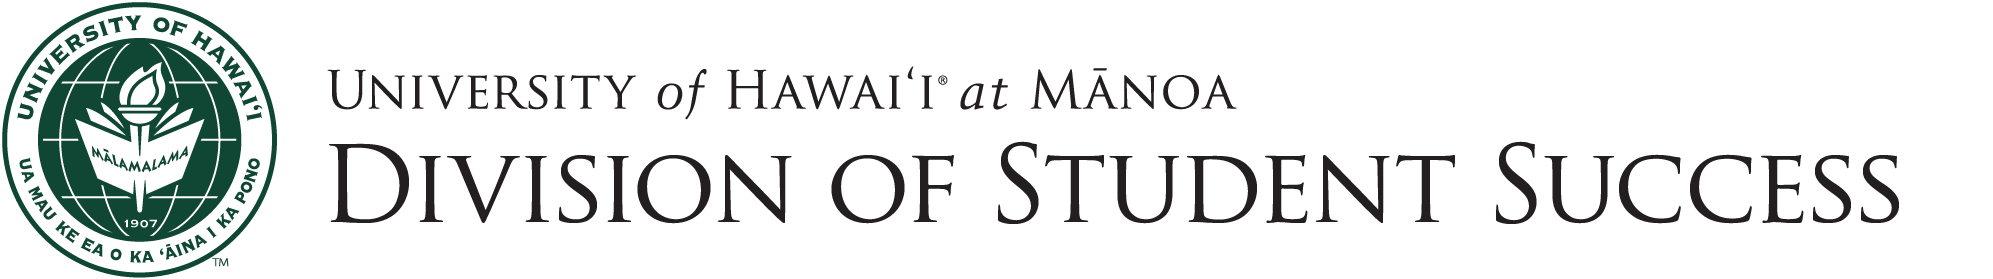 Division of Student Success - University of Hawaii at Manoa logo